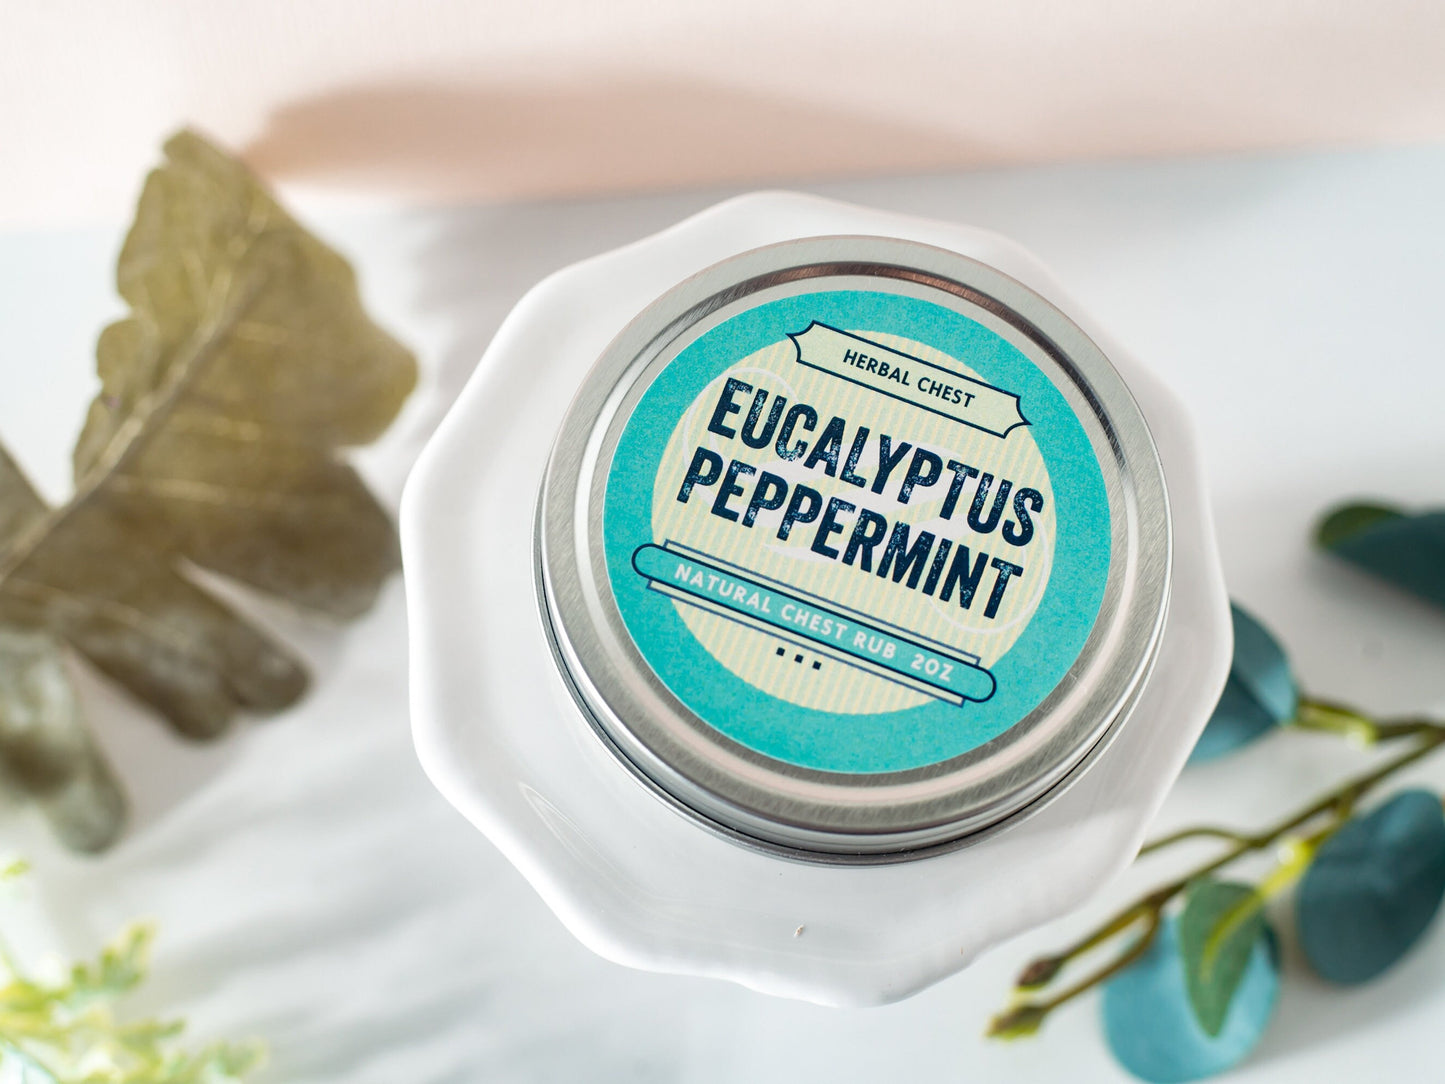 Natural Chest Rub, Eucalyptus Peppermint Salve